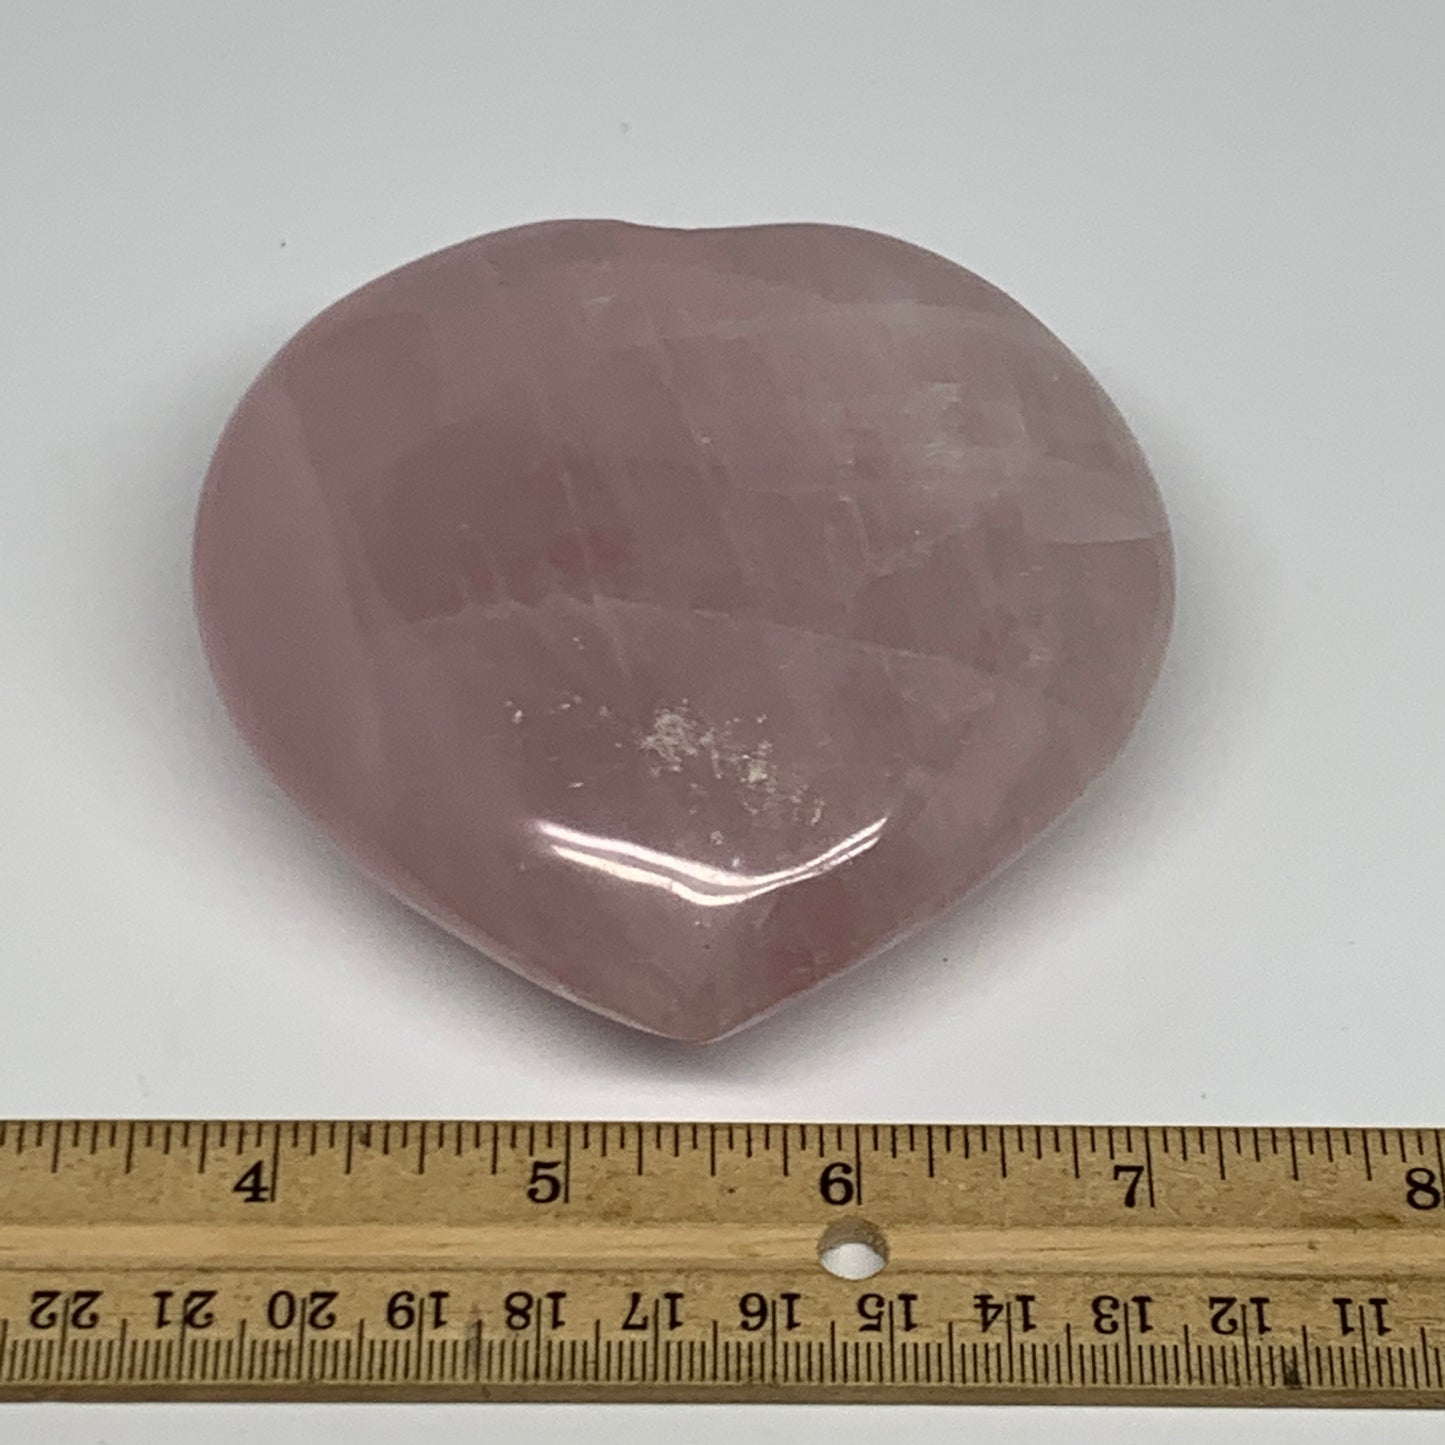 387.9g, 3.6" x 3.6" x 1.4" Rose Quartz Heart Healing Crystal @Madagascar, B17393